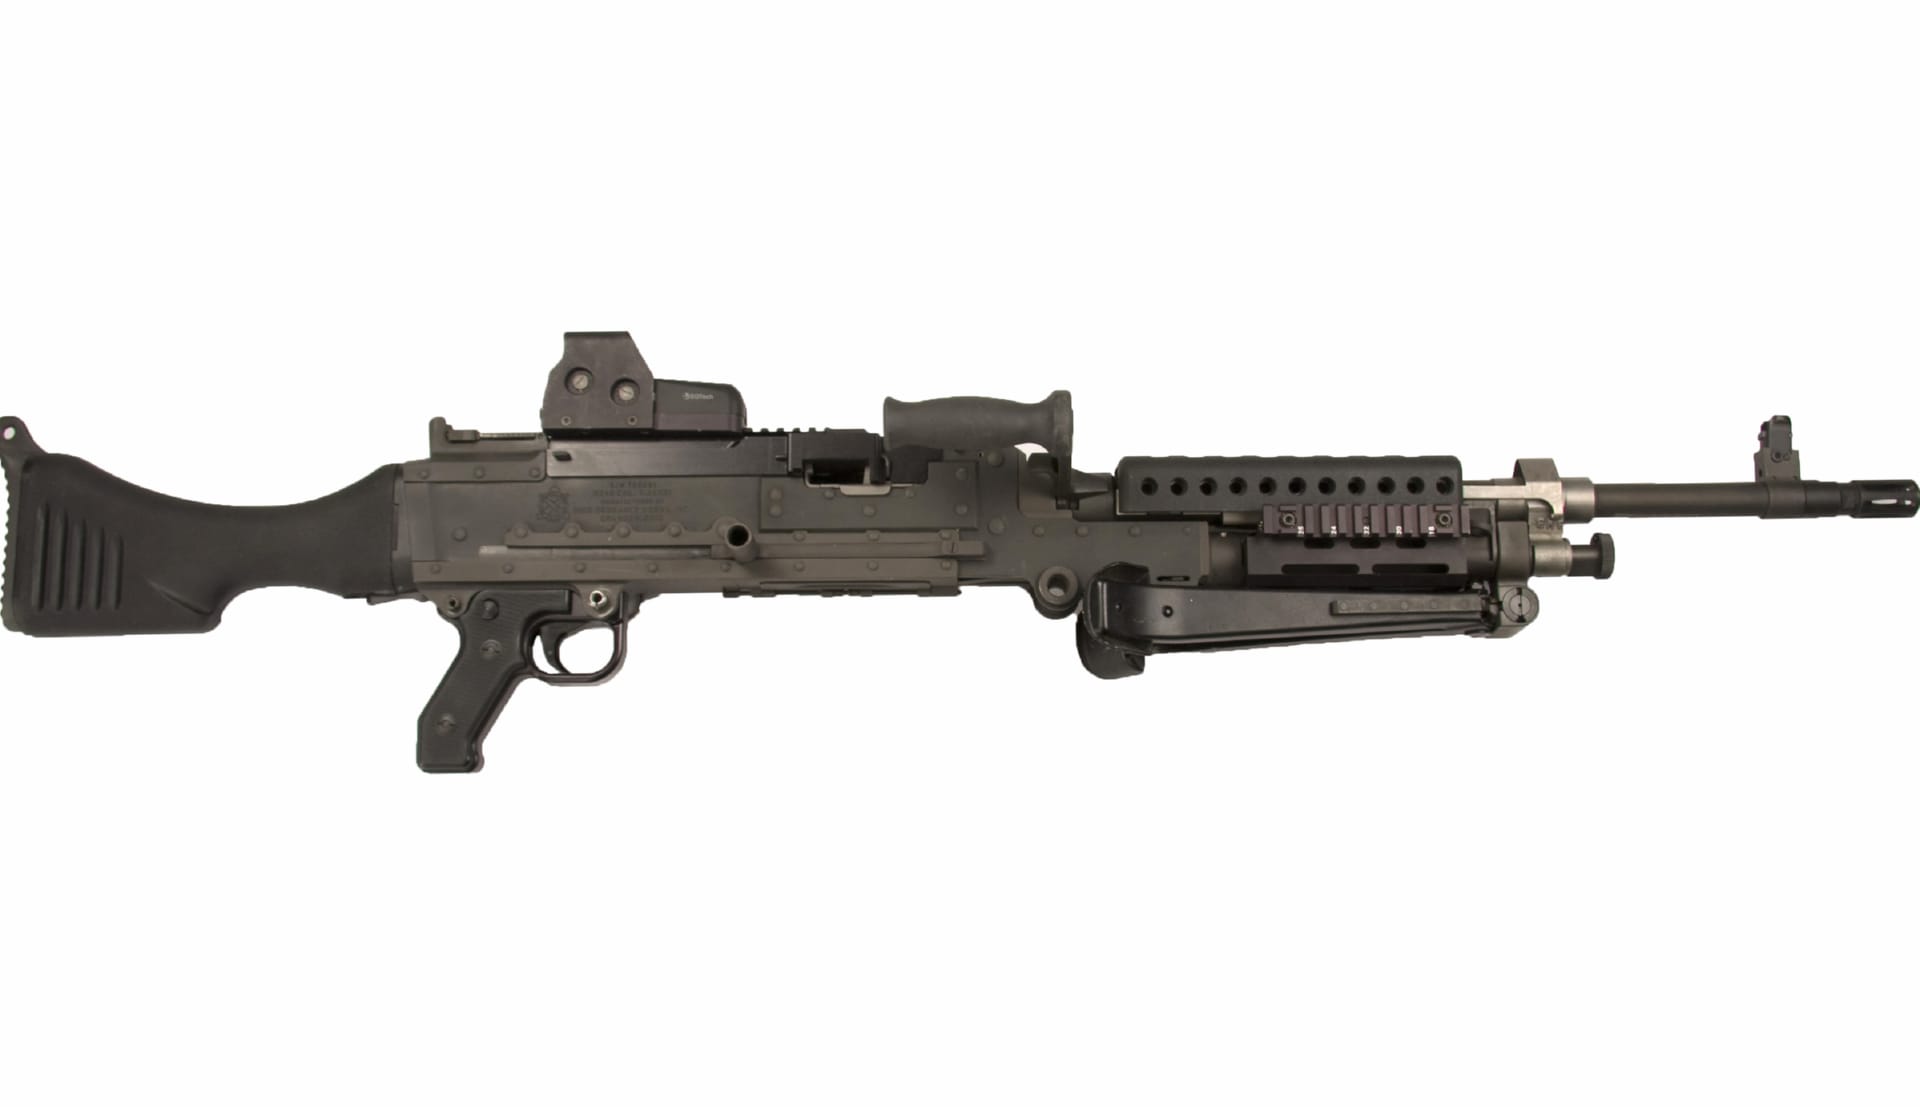 M240 machine gun at 2048 x 2048 iPad size wallpapers HD quality